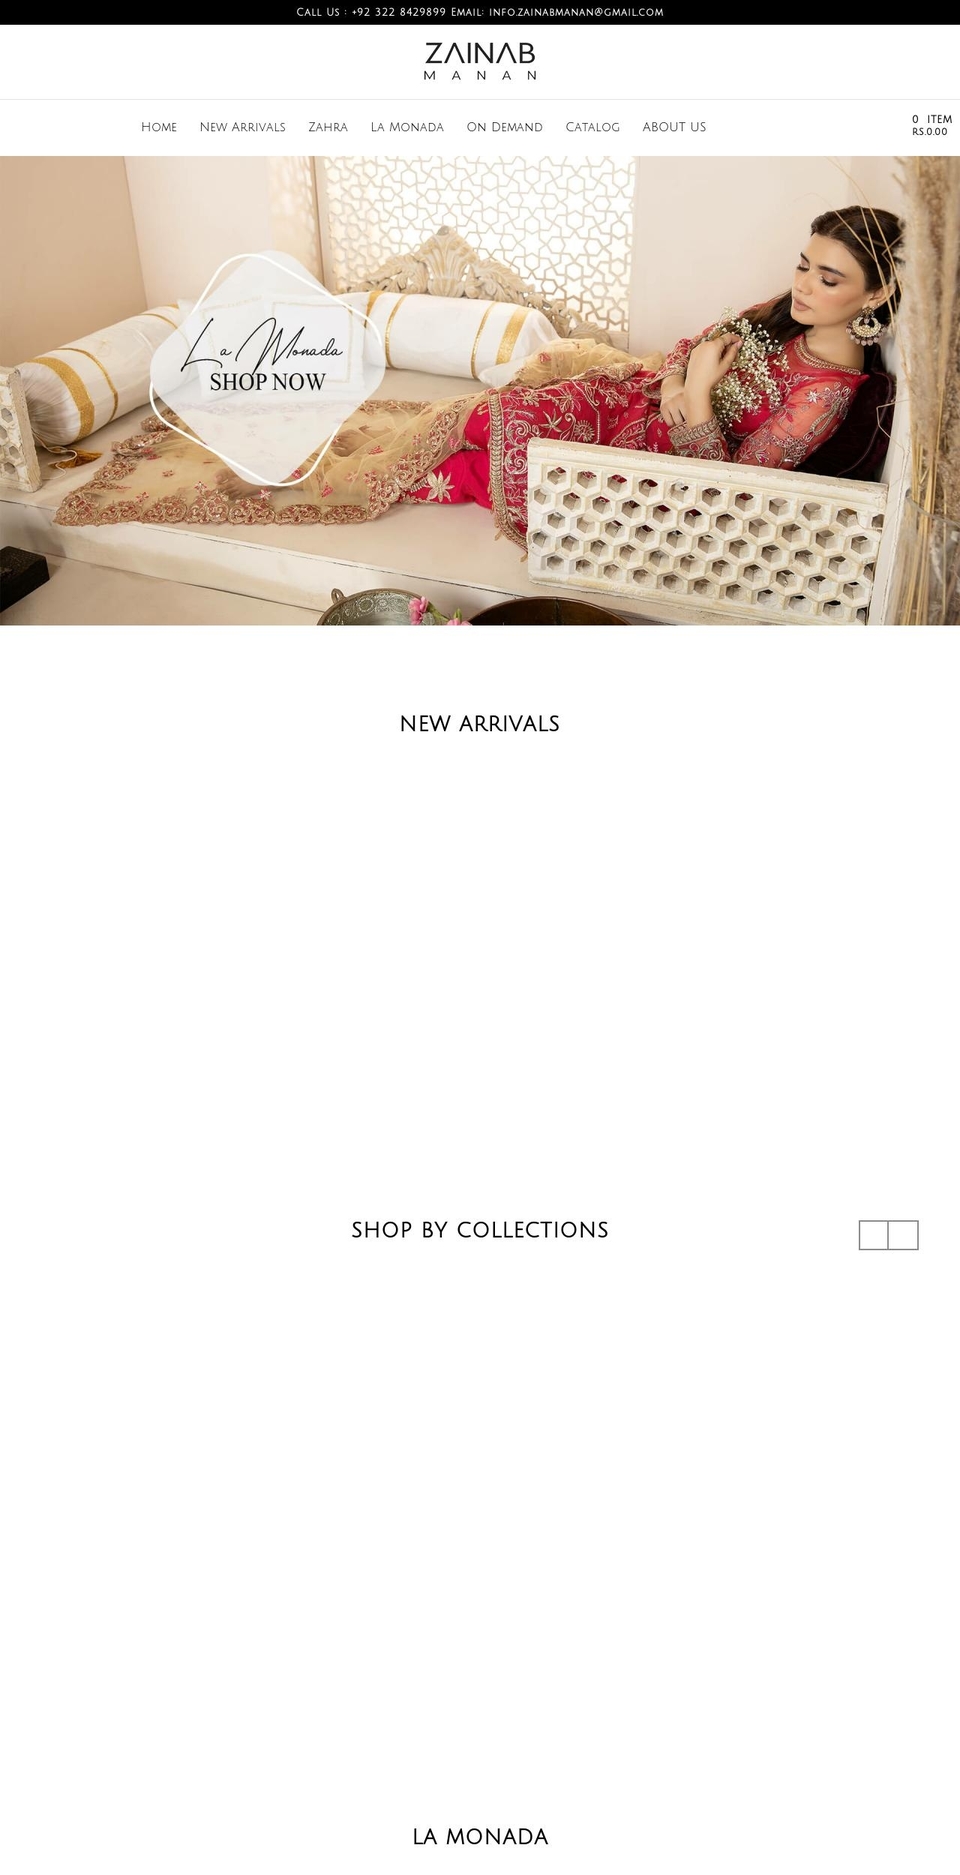 zainabmanan.com shopify website screenshot